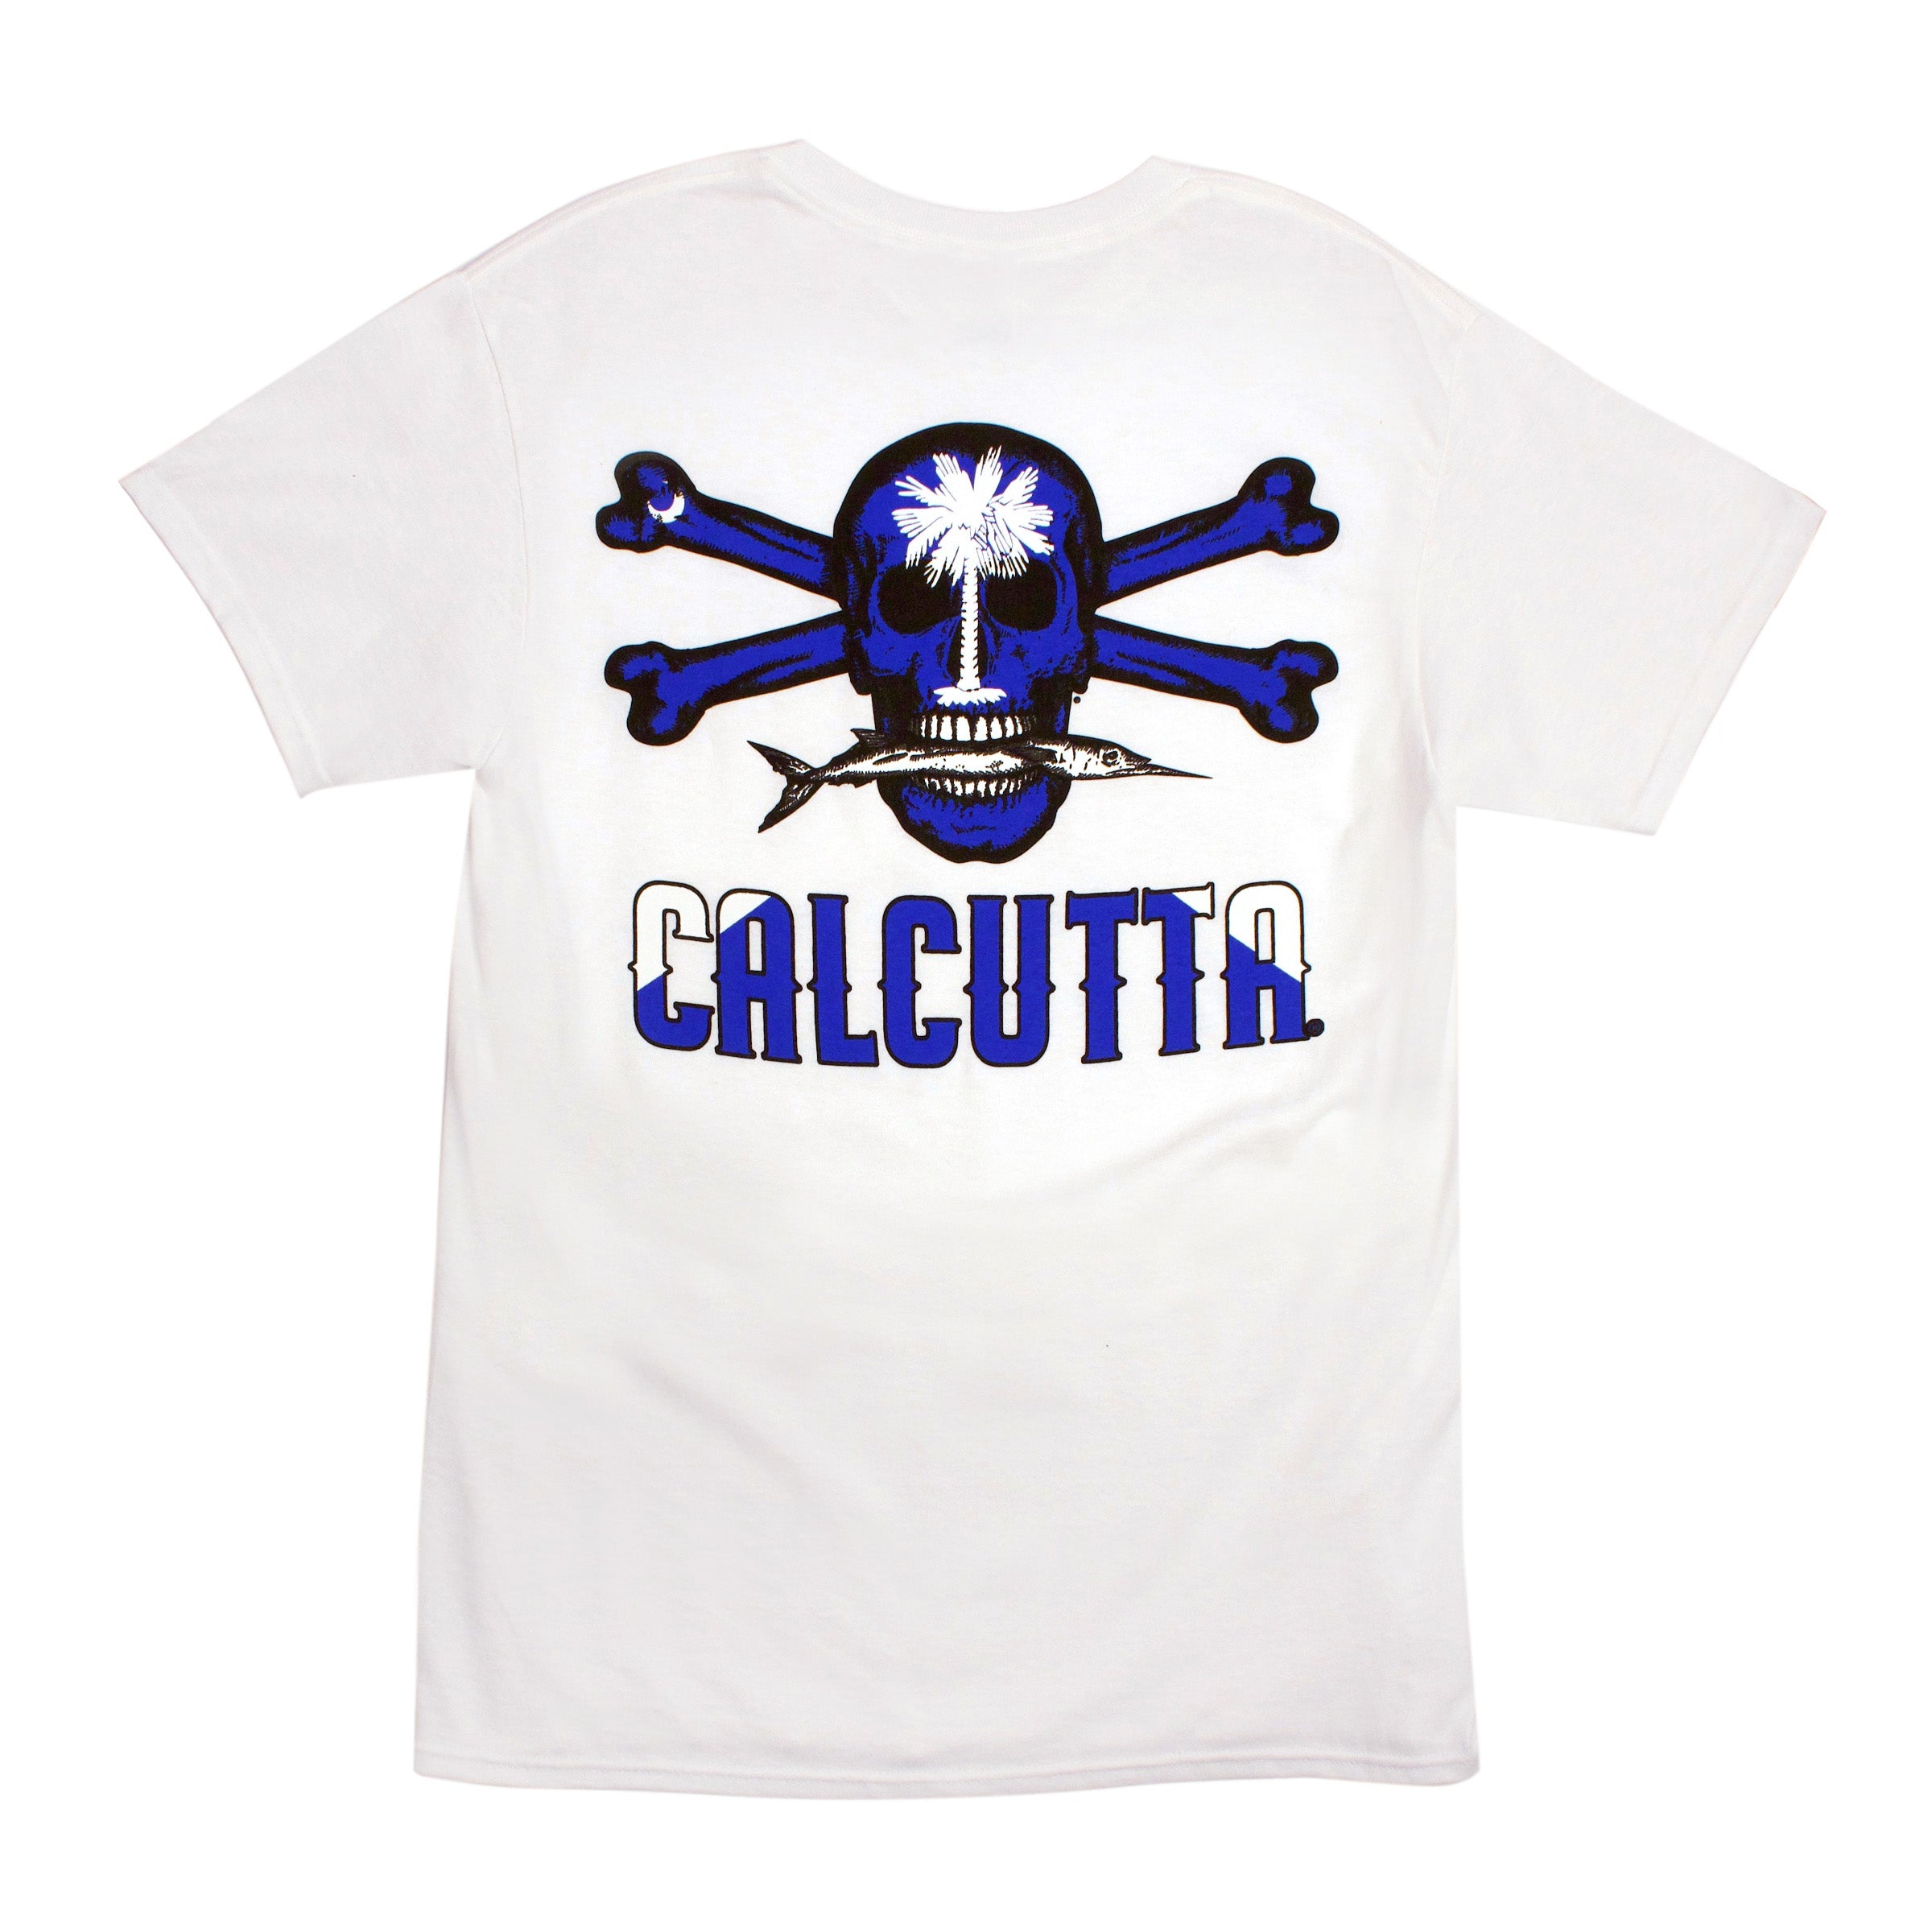 Men's Fishing T-Shirt | Calcutta Outdoors Large / White